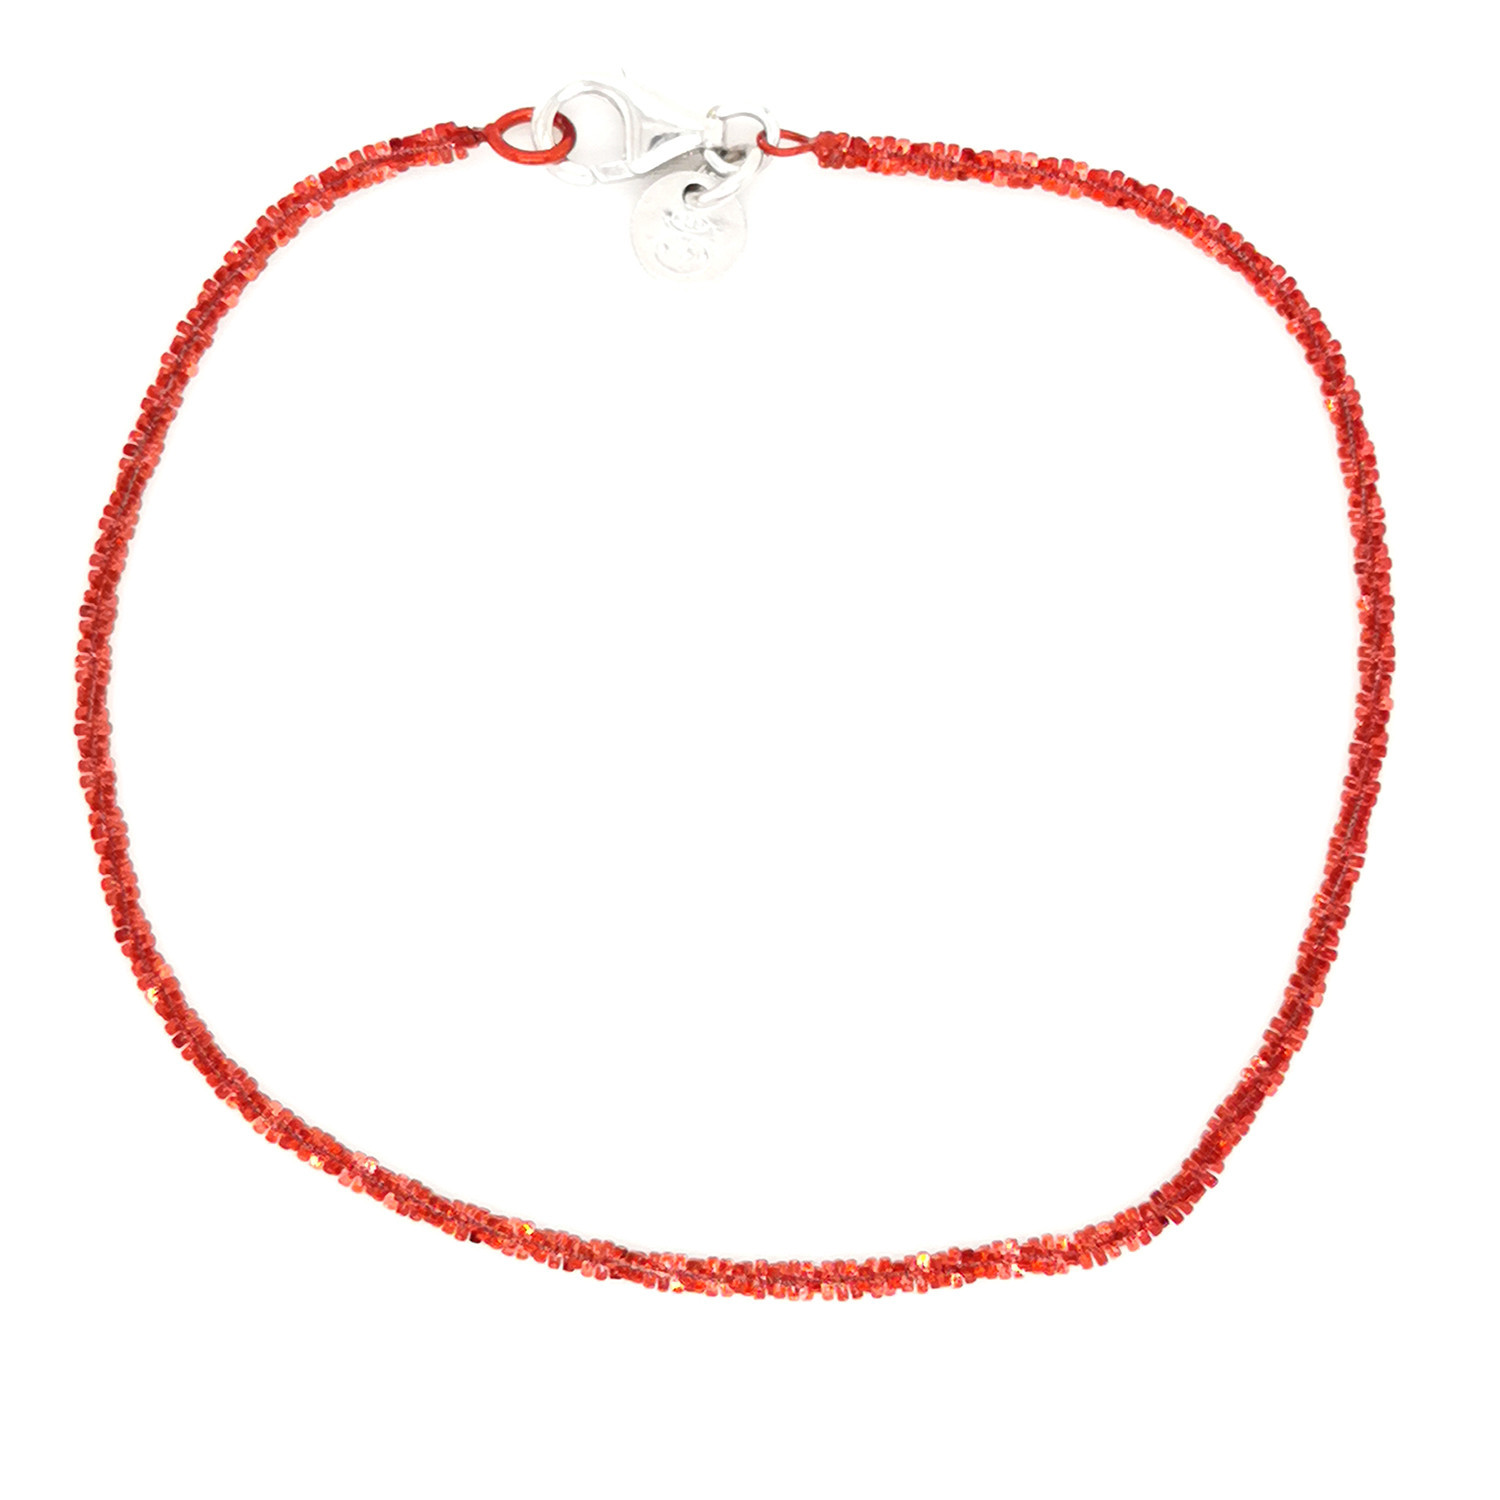 Bracelet Elden argent 925/1000 1 rang rouge rubis
collection Catch the Rainbow